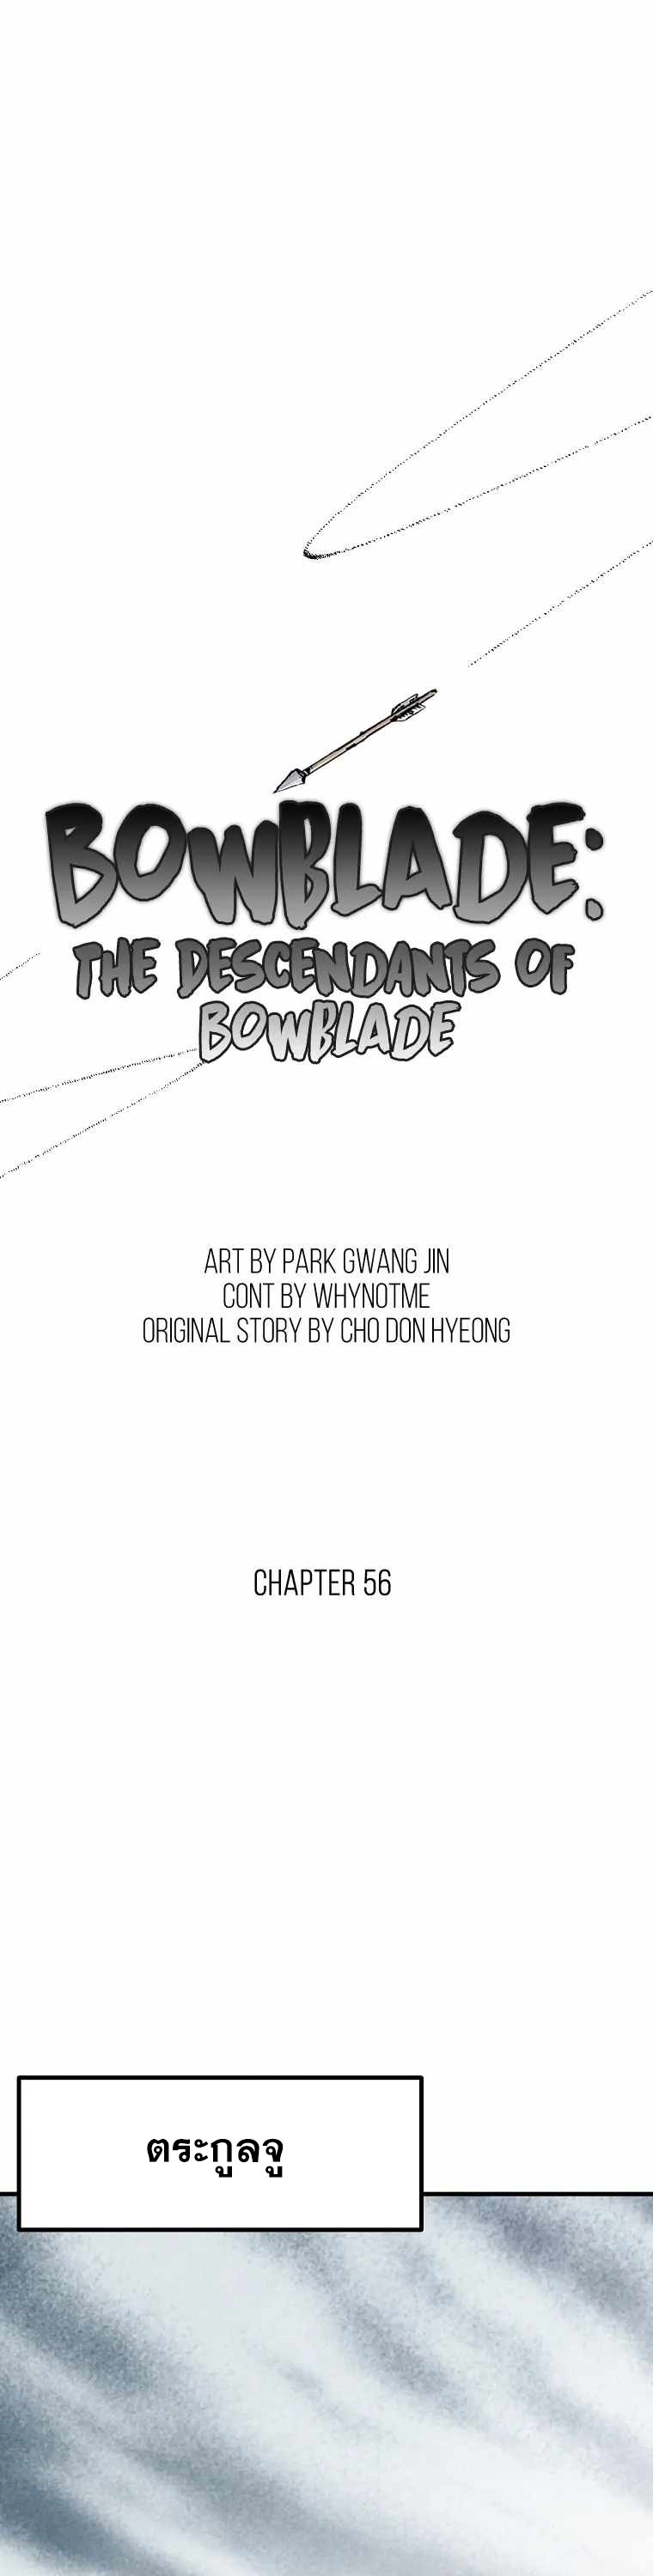 Bowblade (The Descendants of Bowblade) 56 (17)